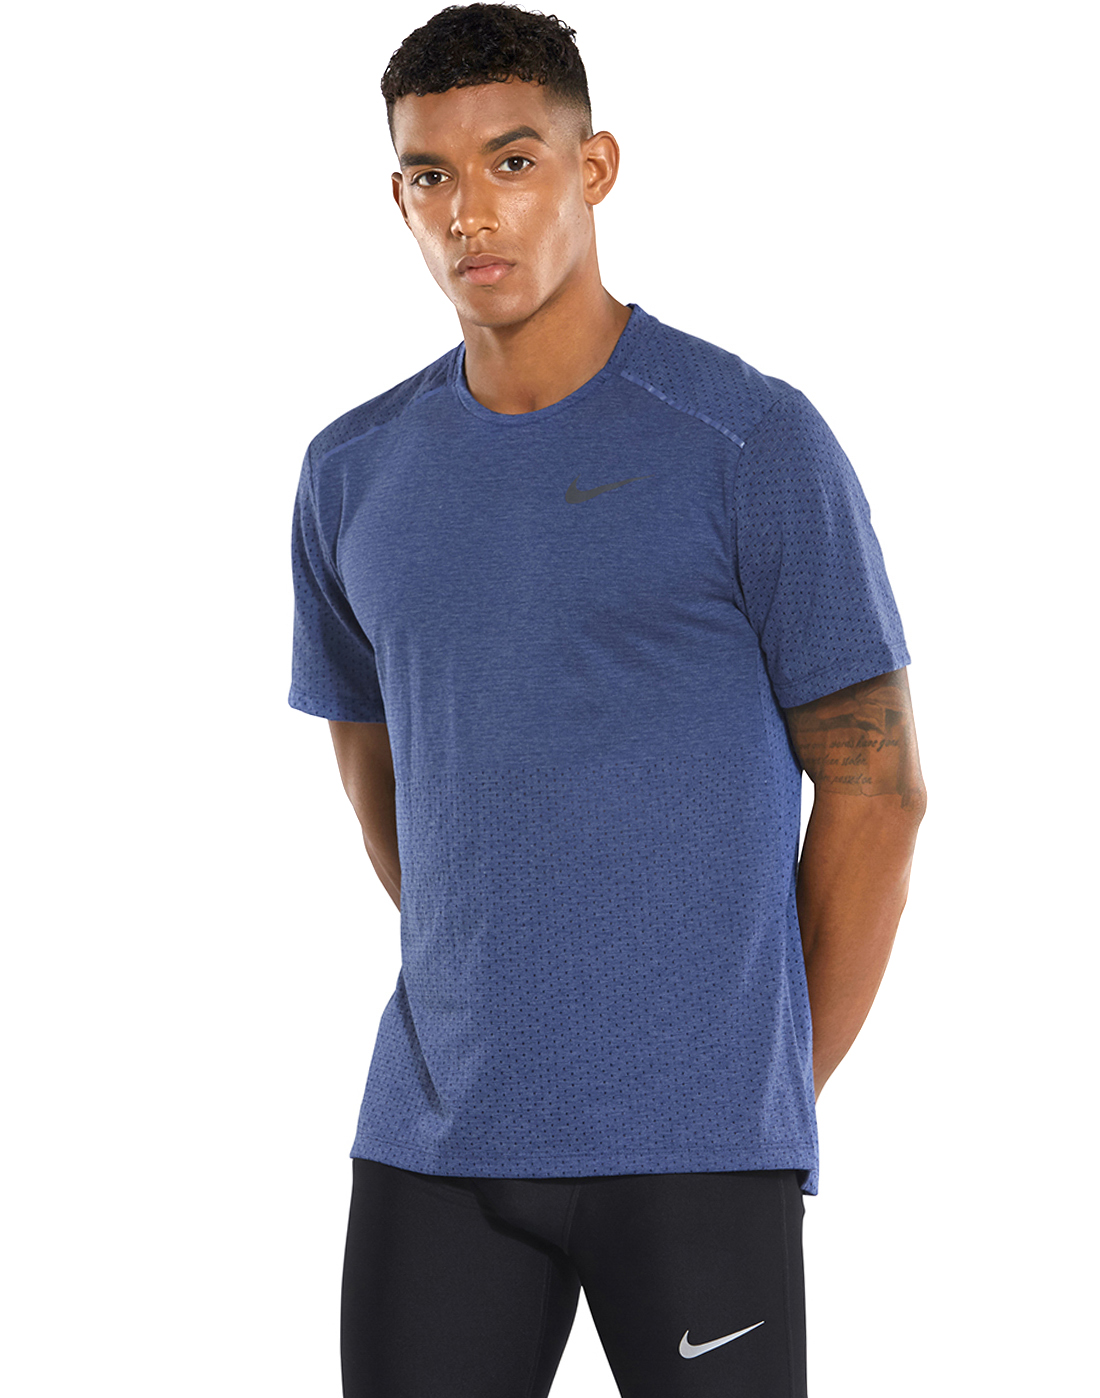 Men's Blue Nike Breathe Rise Running T-Shirt | Life Style Sports